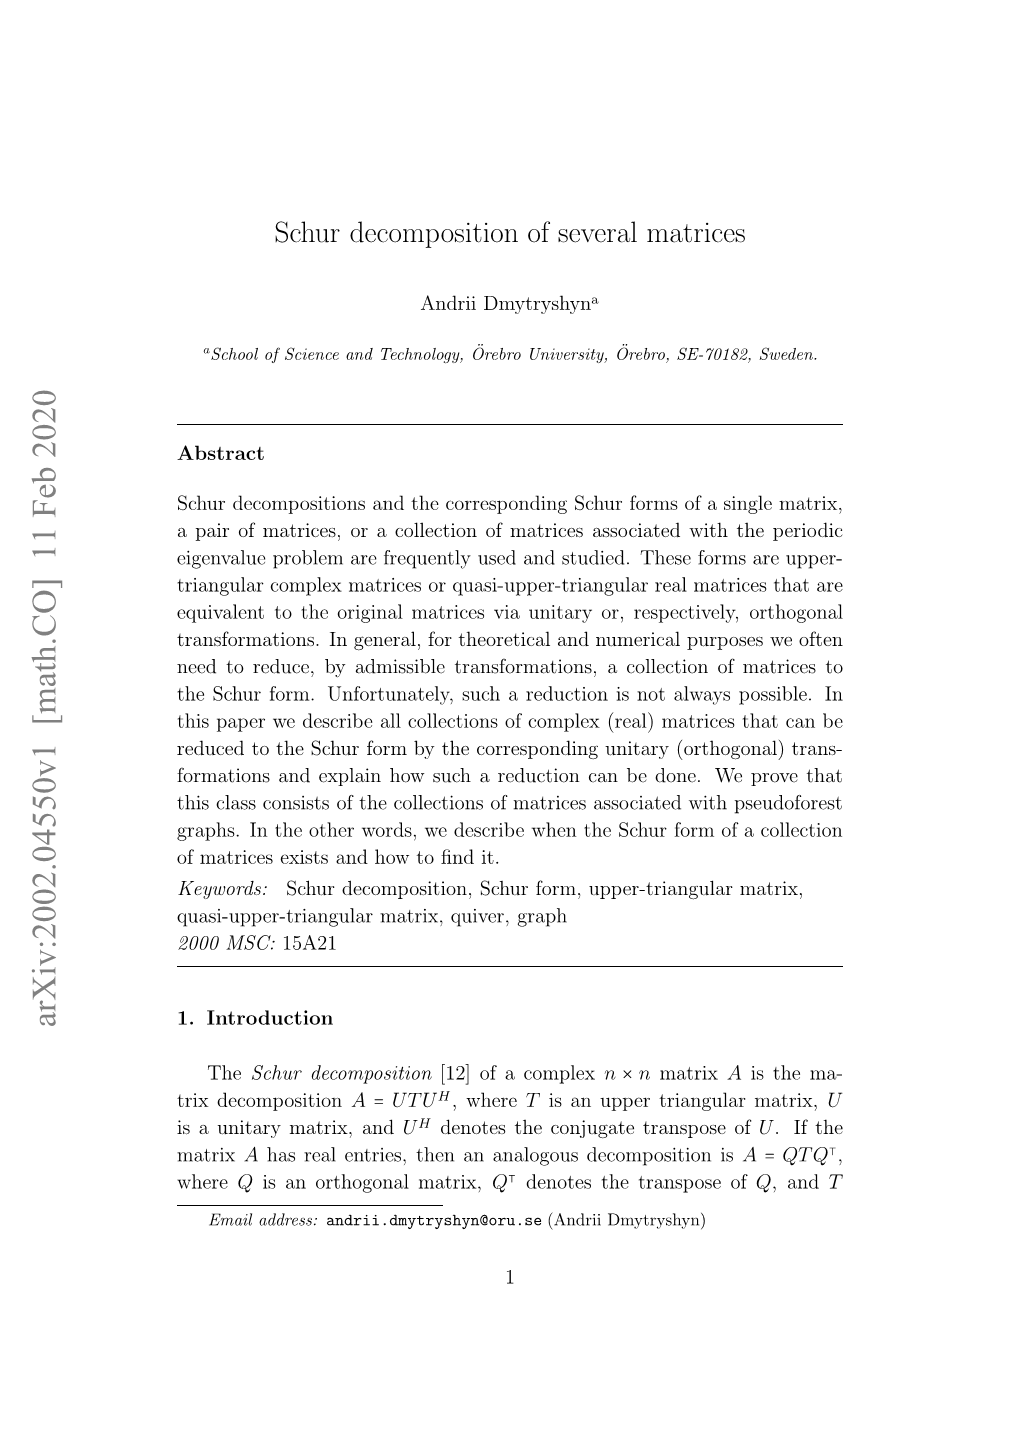 Schur Decomposition of Several Matrices